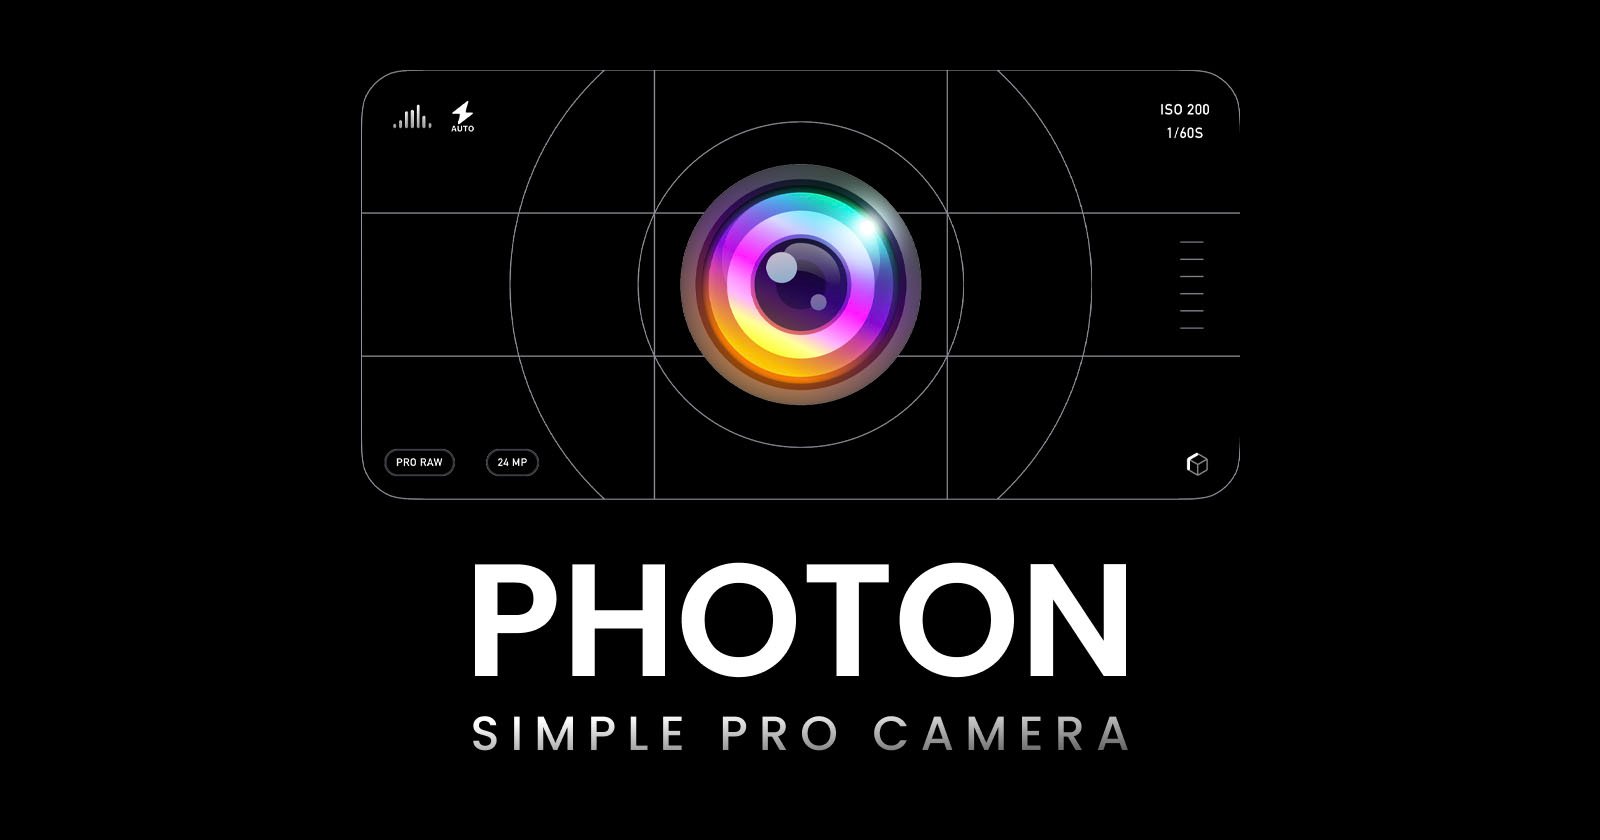  photon app iphone lets save 